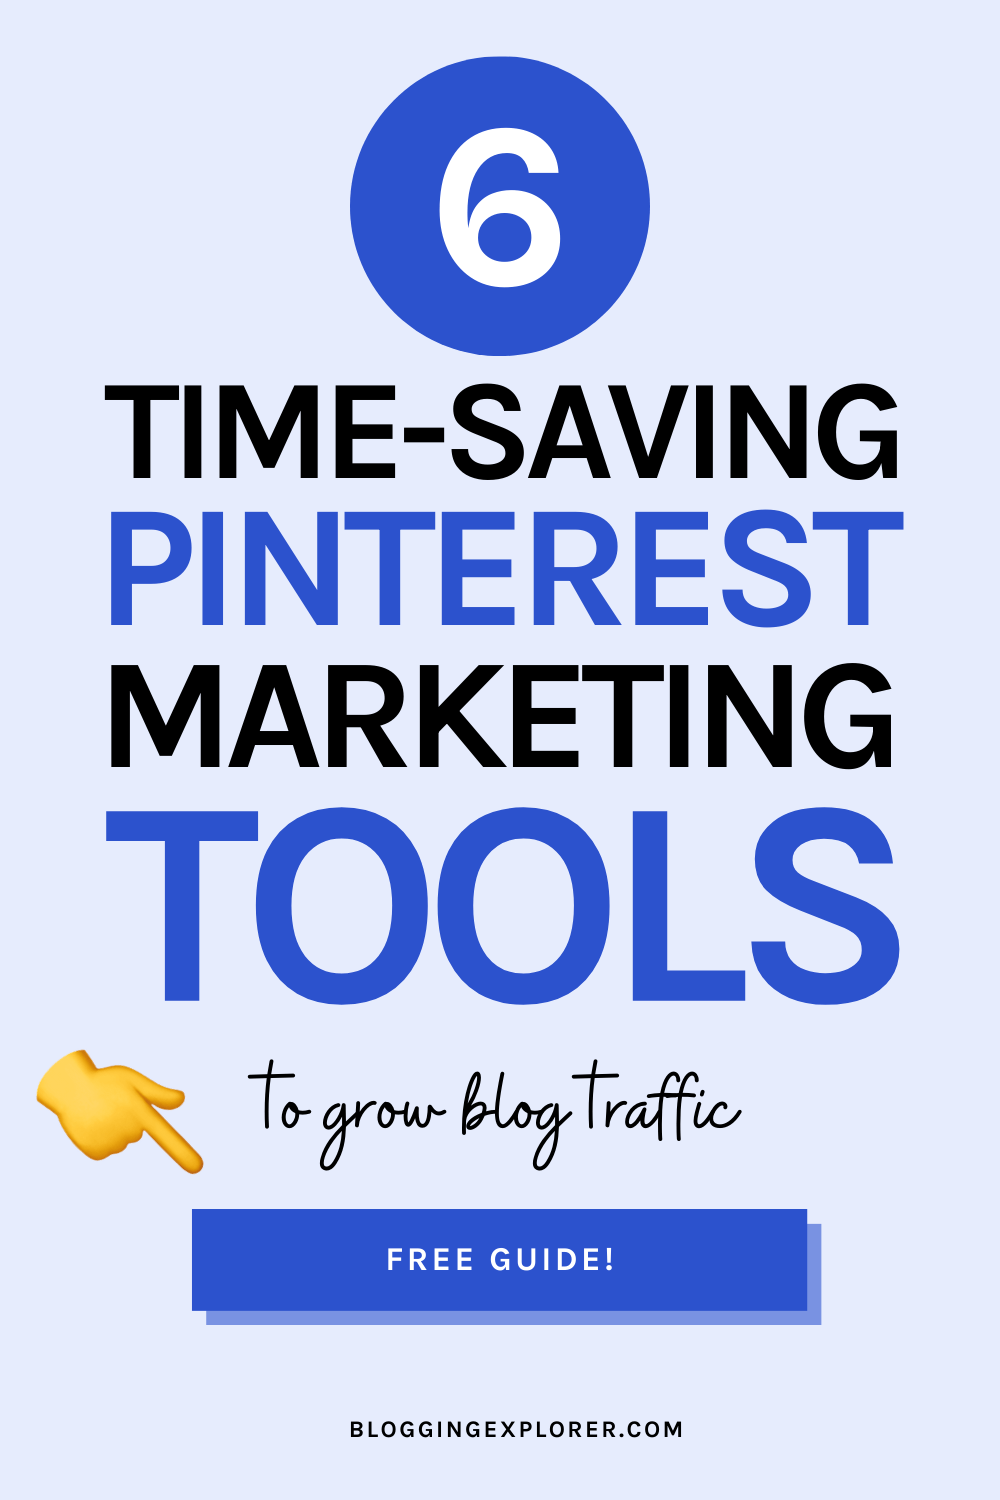 Time-saving Pinterest marketing tools to grow blog traffic